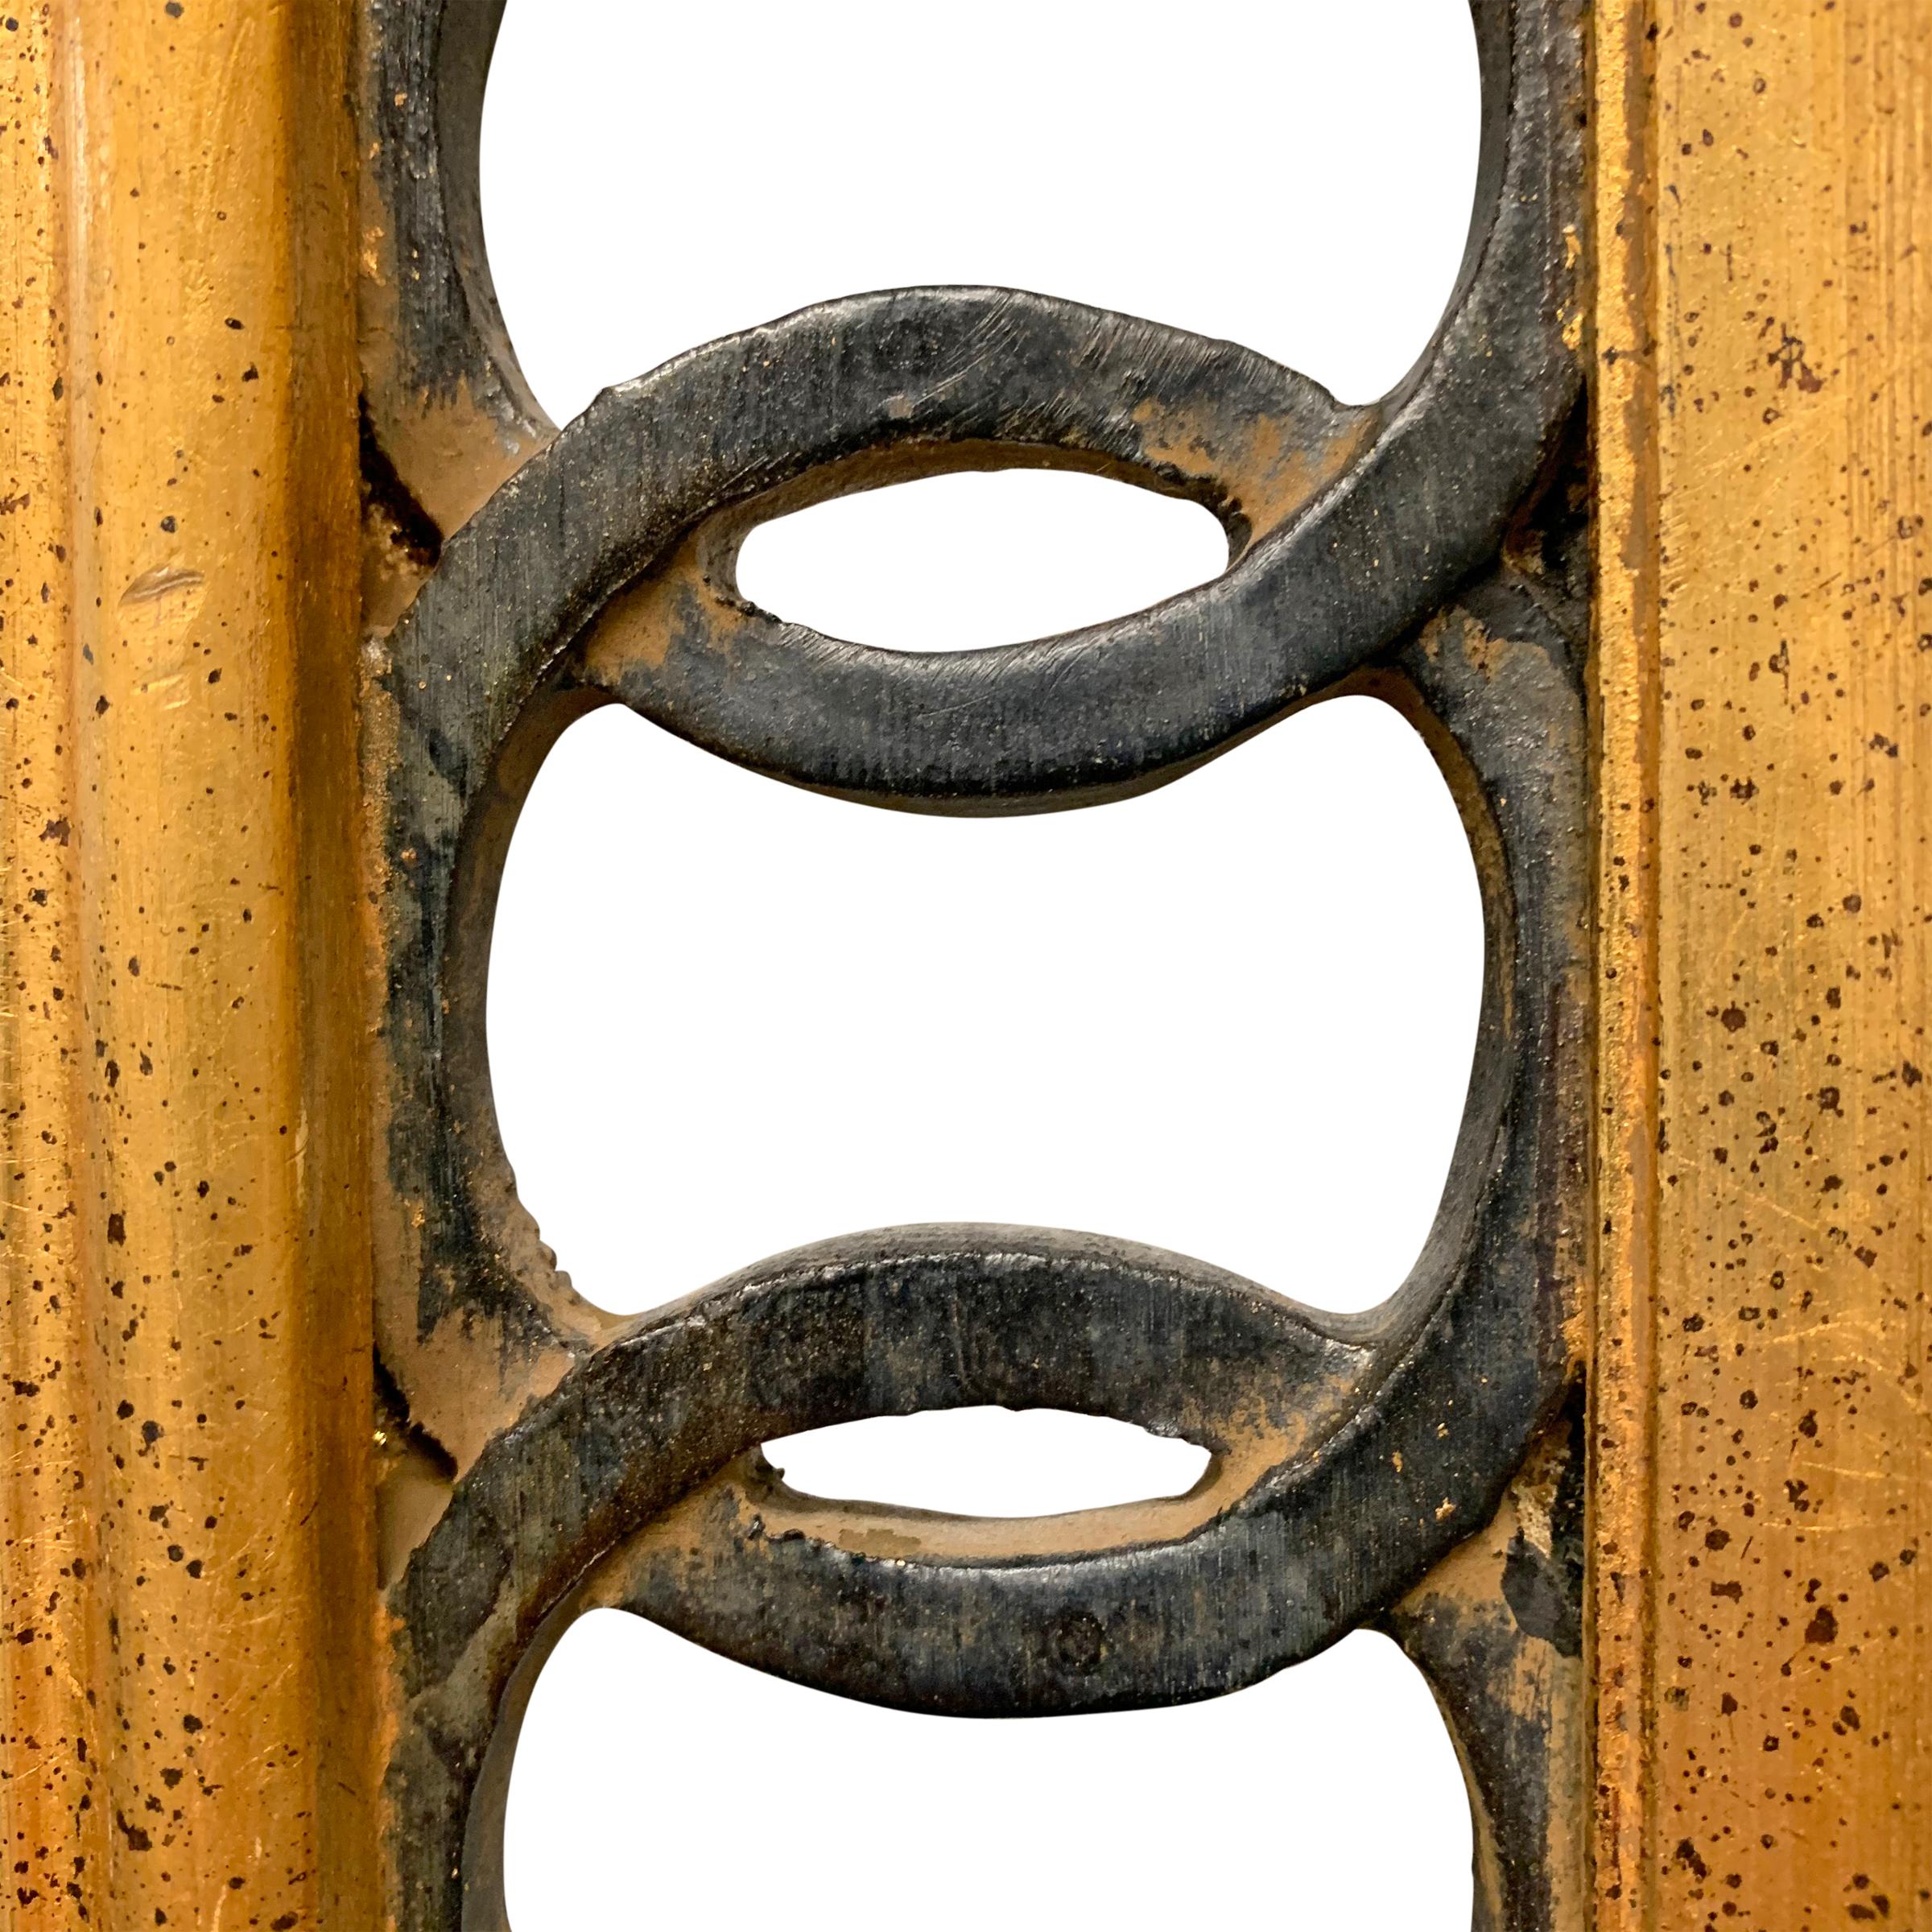 Italian Neoclassical Framed Mirror with Interlocking Rings 1